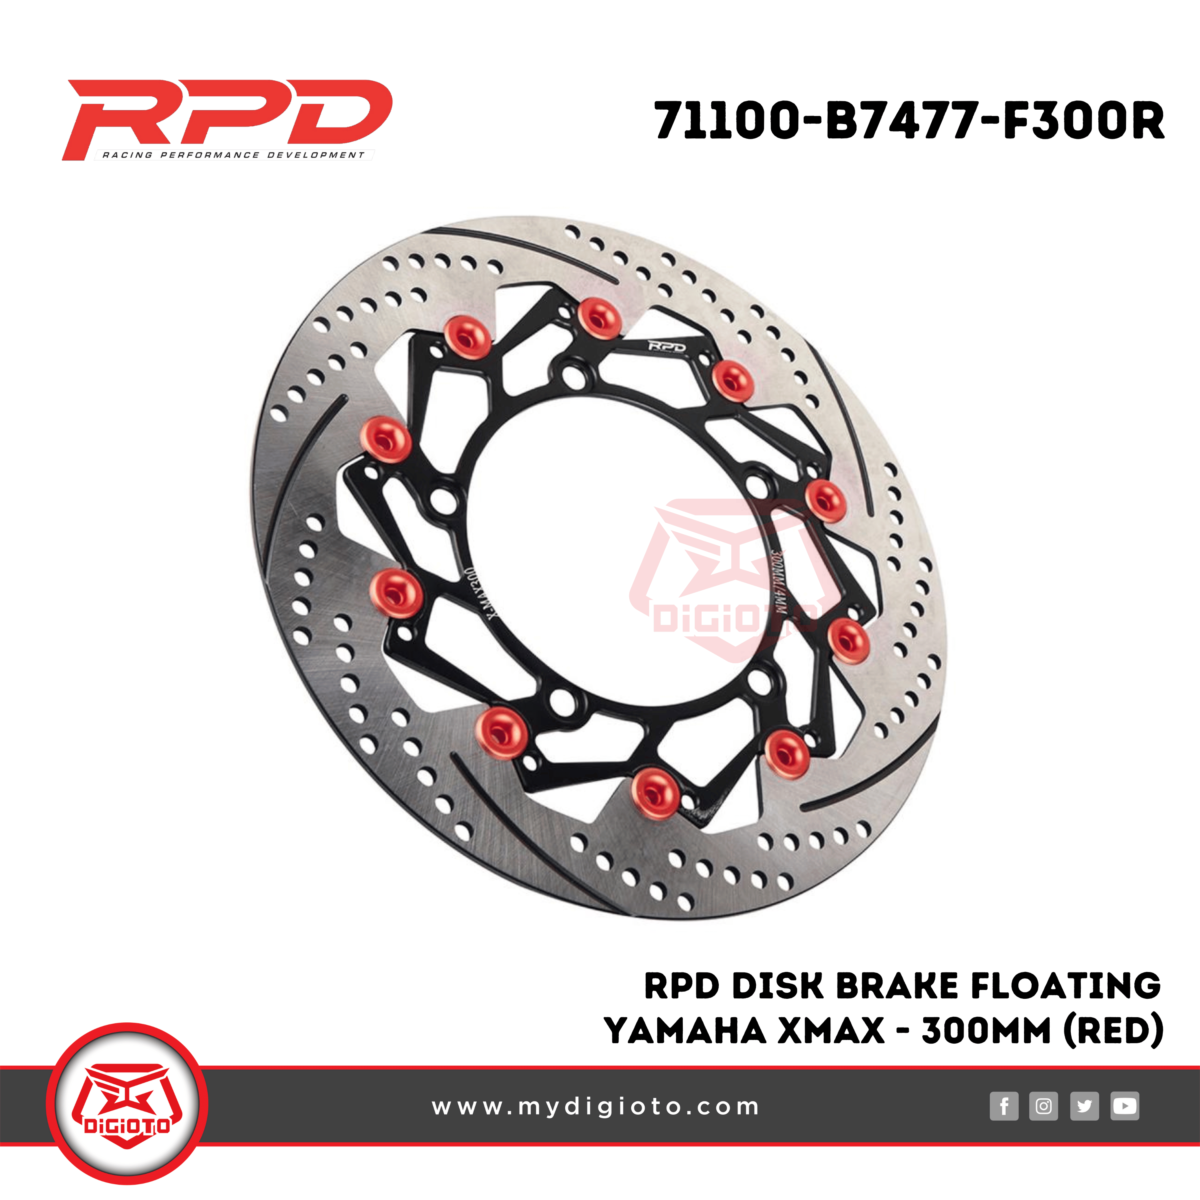 RPD Disk Brake Floating yamaha xmax red